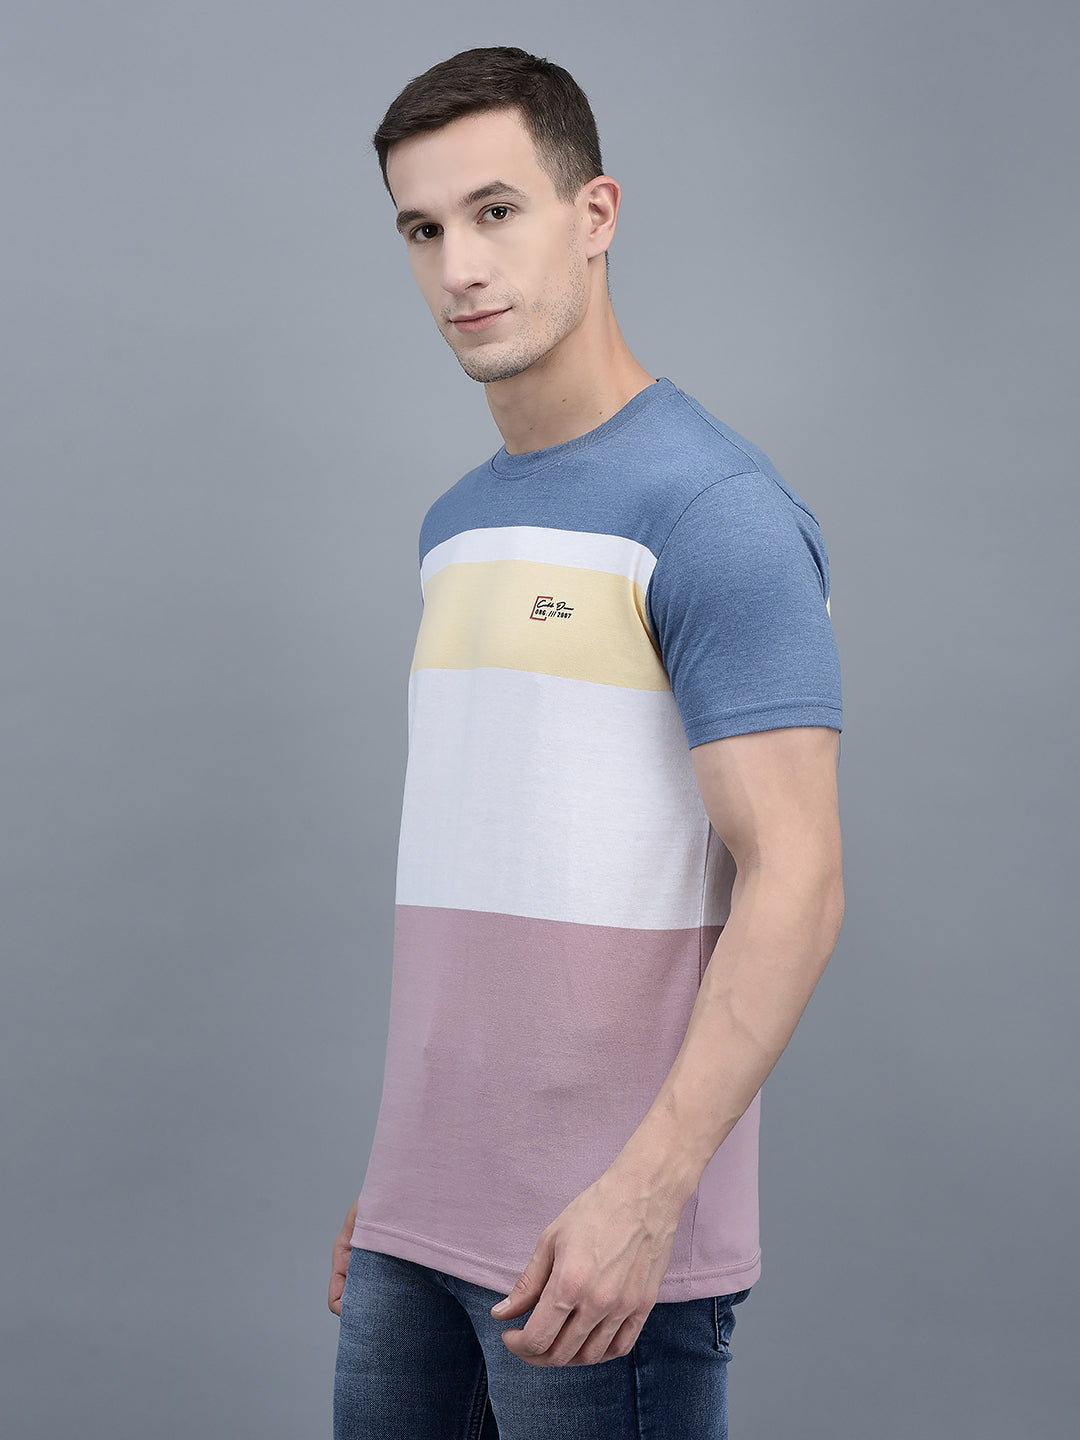 Cobb Multicolor Striped Round Neck T-Shirt